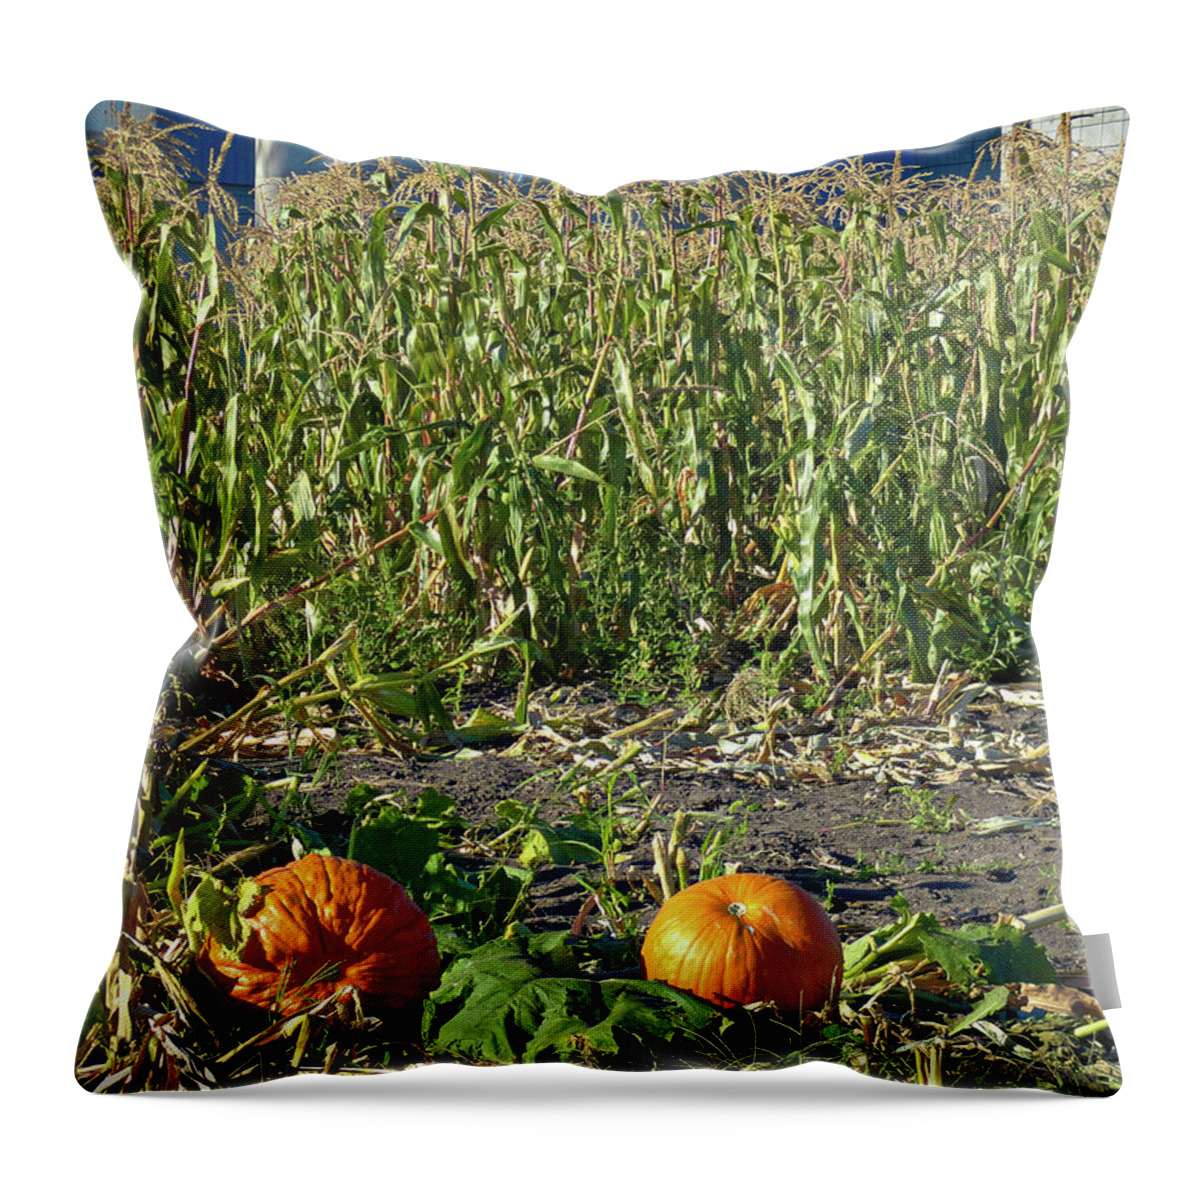 Autumn Throw Pillow featuring the photograph Autumn Harvest by Robert Meyers-Lussier